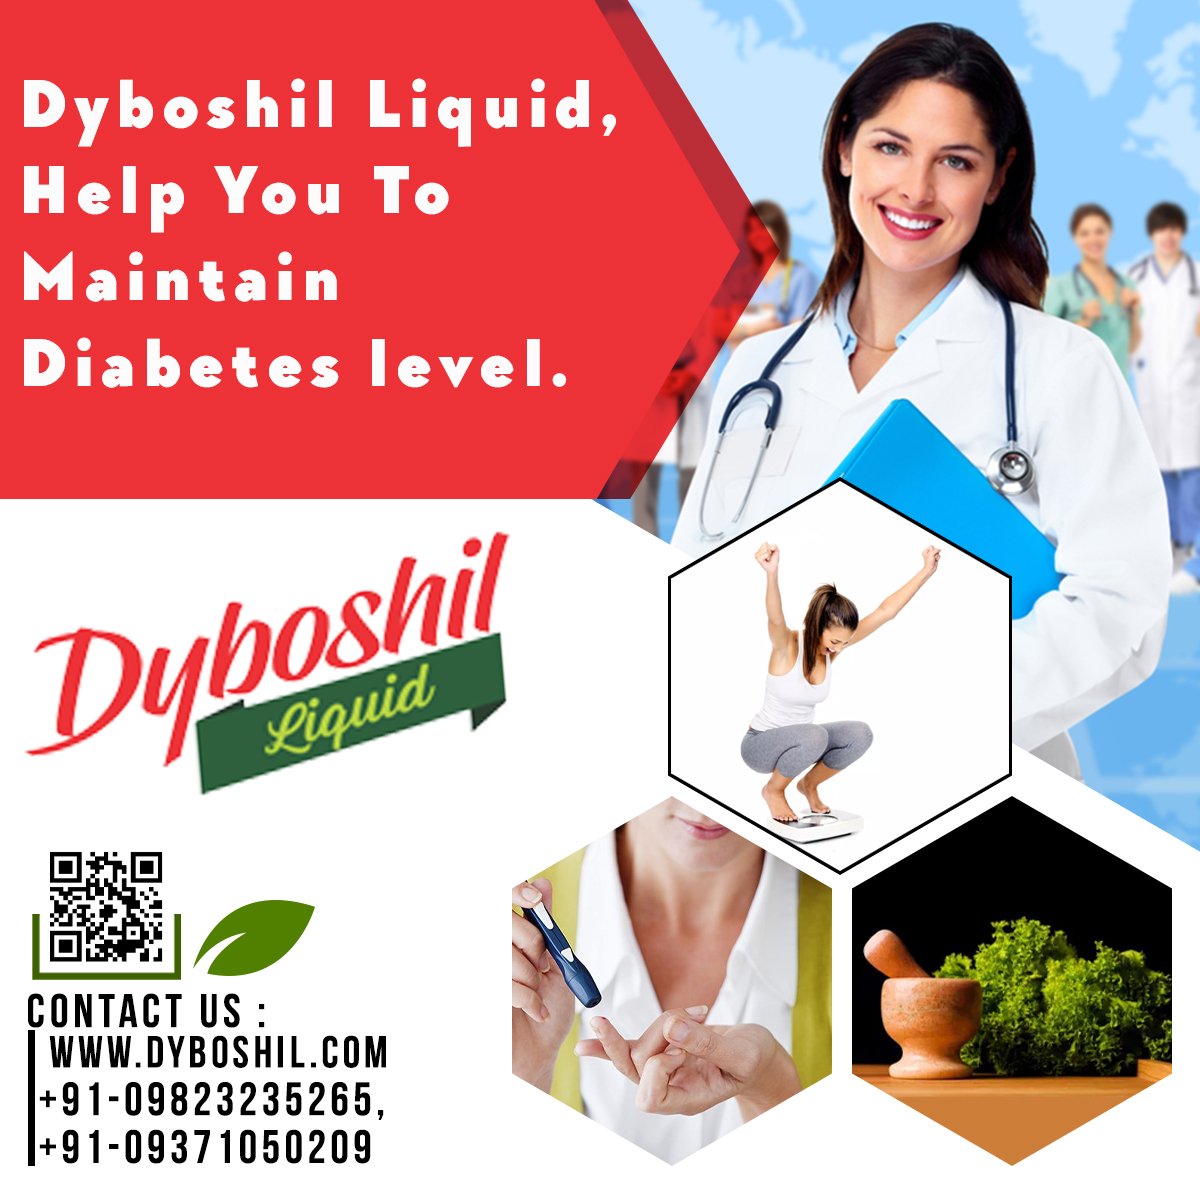 Dyboshil Liquid, Help You To Maintain #Diabetes level.
💁‍♂️ dyboshil.com          📲+91-9371050209
#PuneDiabetesAyurvedaCare #AyurvedaCare #Diabetes #SugarAyurvedaRemedy #Mumbai #DiabetesTreatment #DiabetesAyurvedaCare #Ayurveda2019